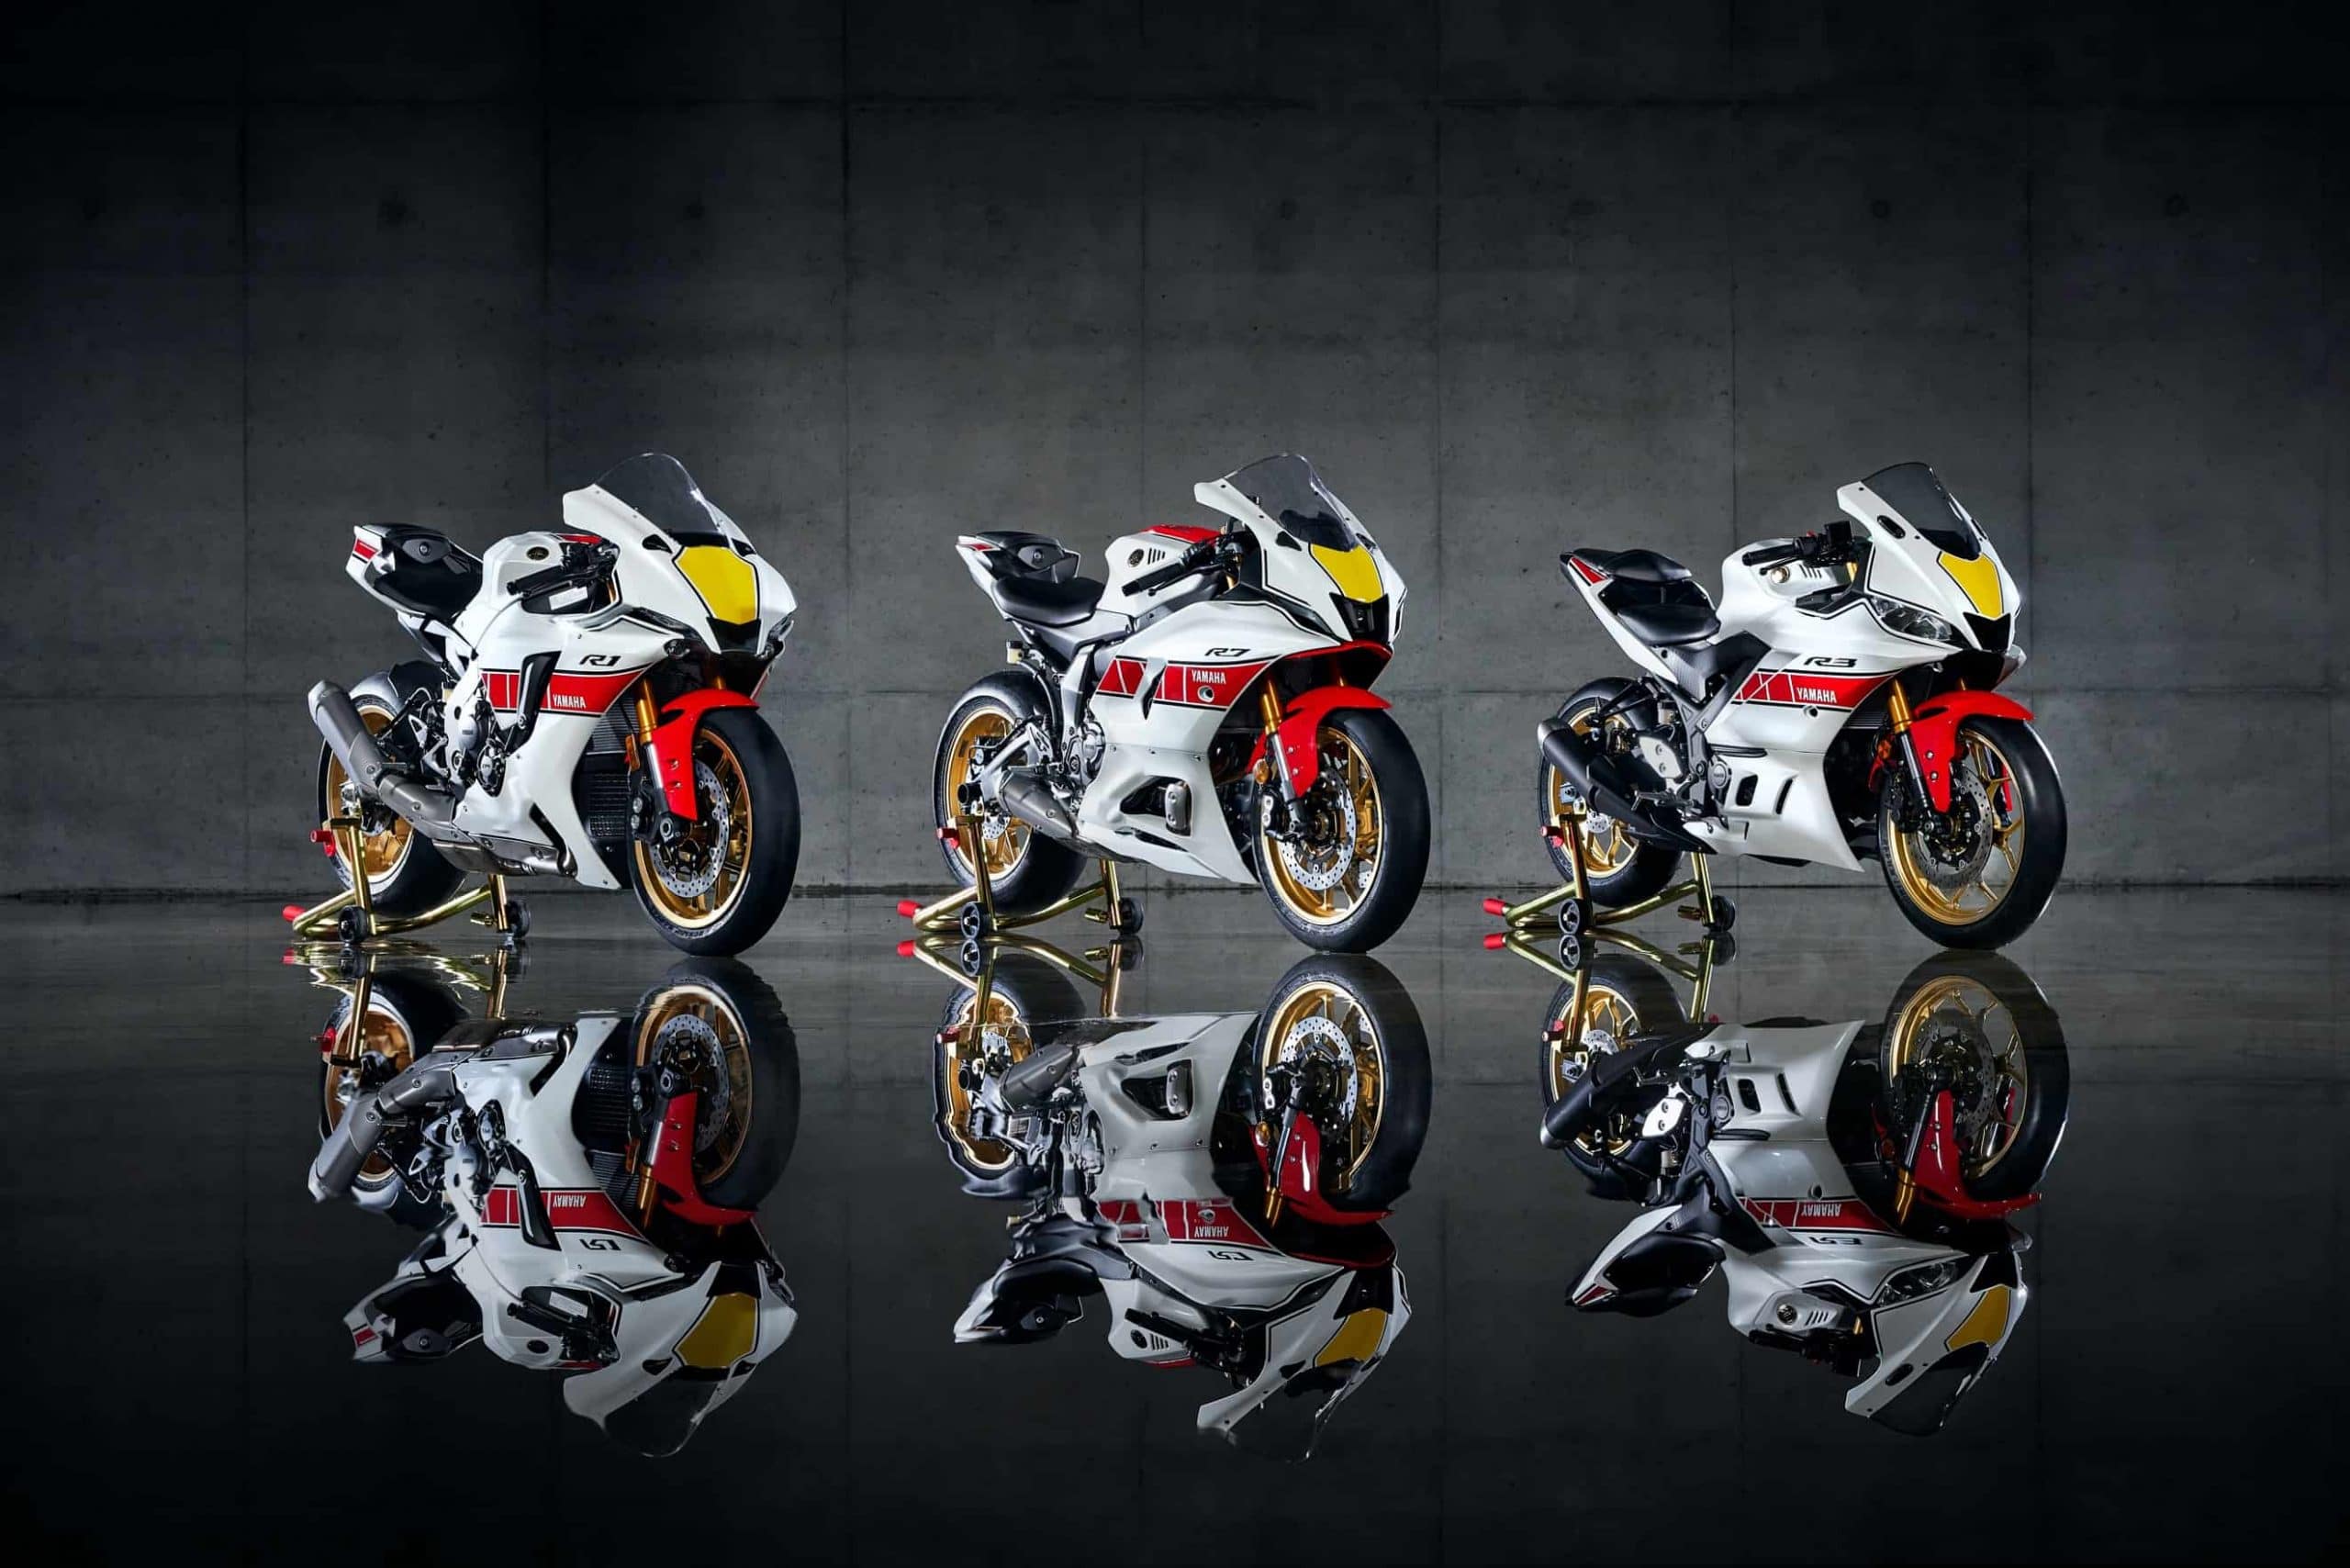 La famille des motos Supersport Yamaha 2022. Source: https://www.yamaha-motor.ca/fr/route/motocyclettes